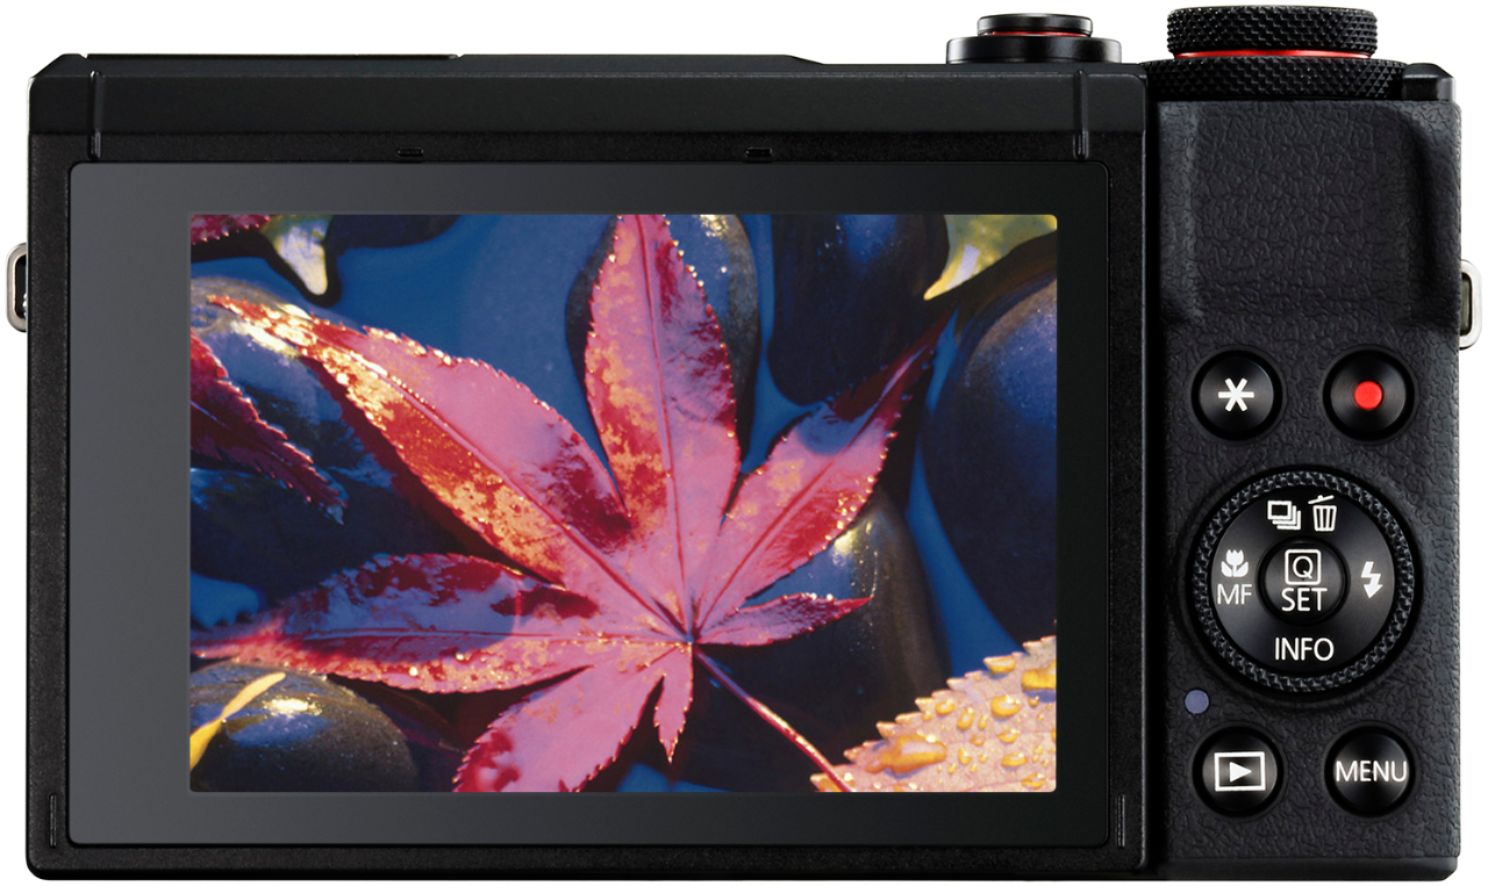 Canon Powershot G7 X Mark Iii 1 Megapixel Digital Camera Video Creator Kit Black 3637c026 Best Buy